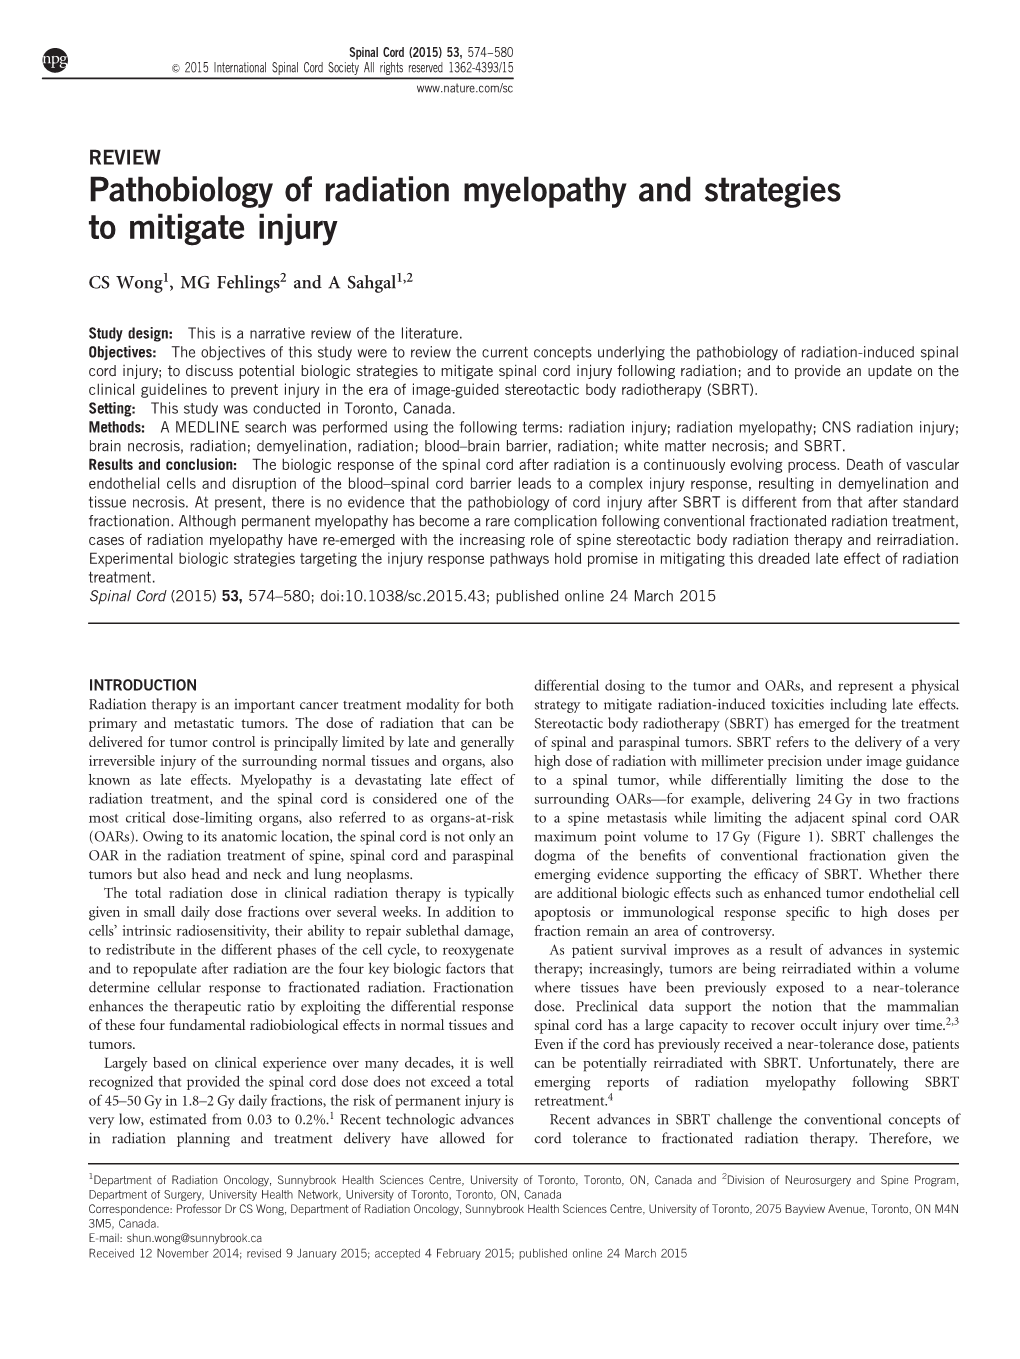 Pathobiology of Radiation Myelopathy and Strategies to Mitigate Injury